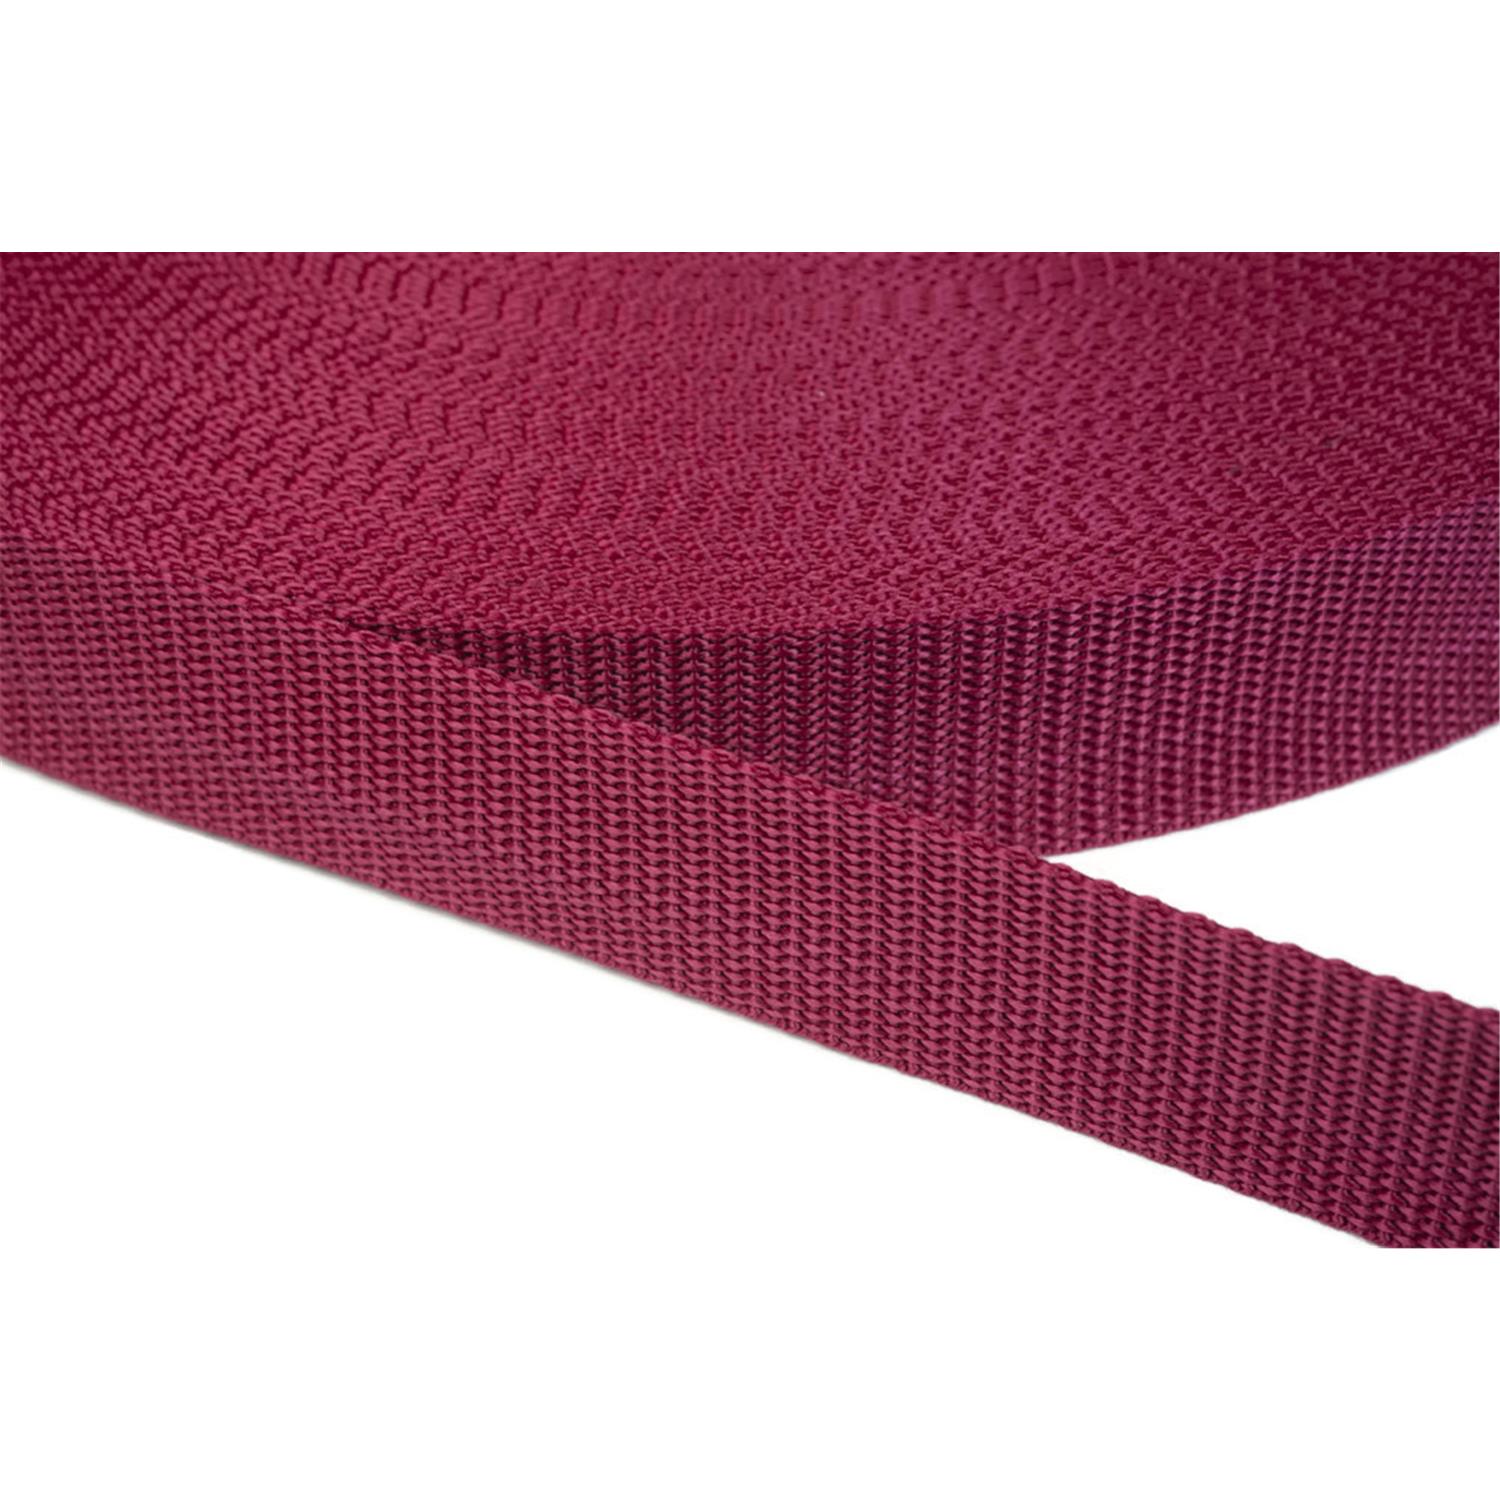 Gurtband 30mm breit aus Polypropylen in 41 Farben 21 - dunkelrot 6 Meter